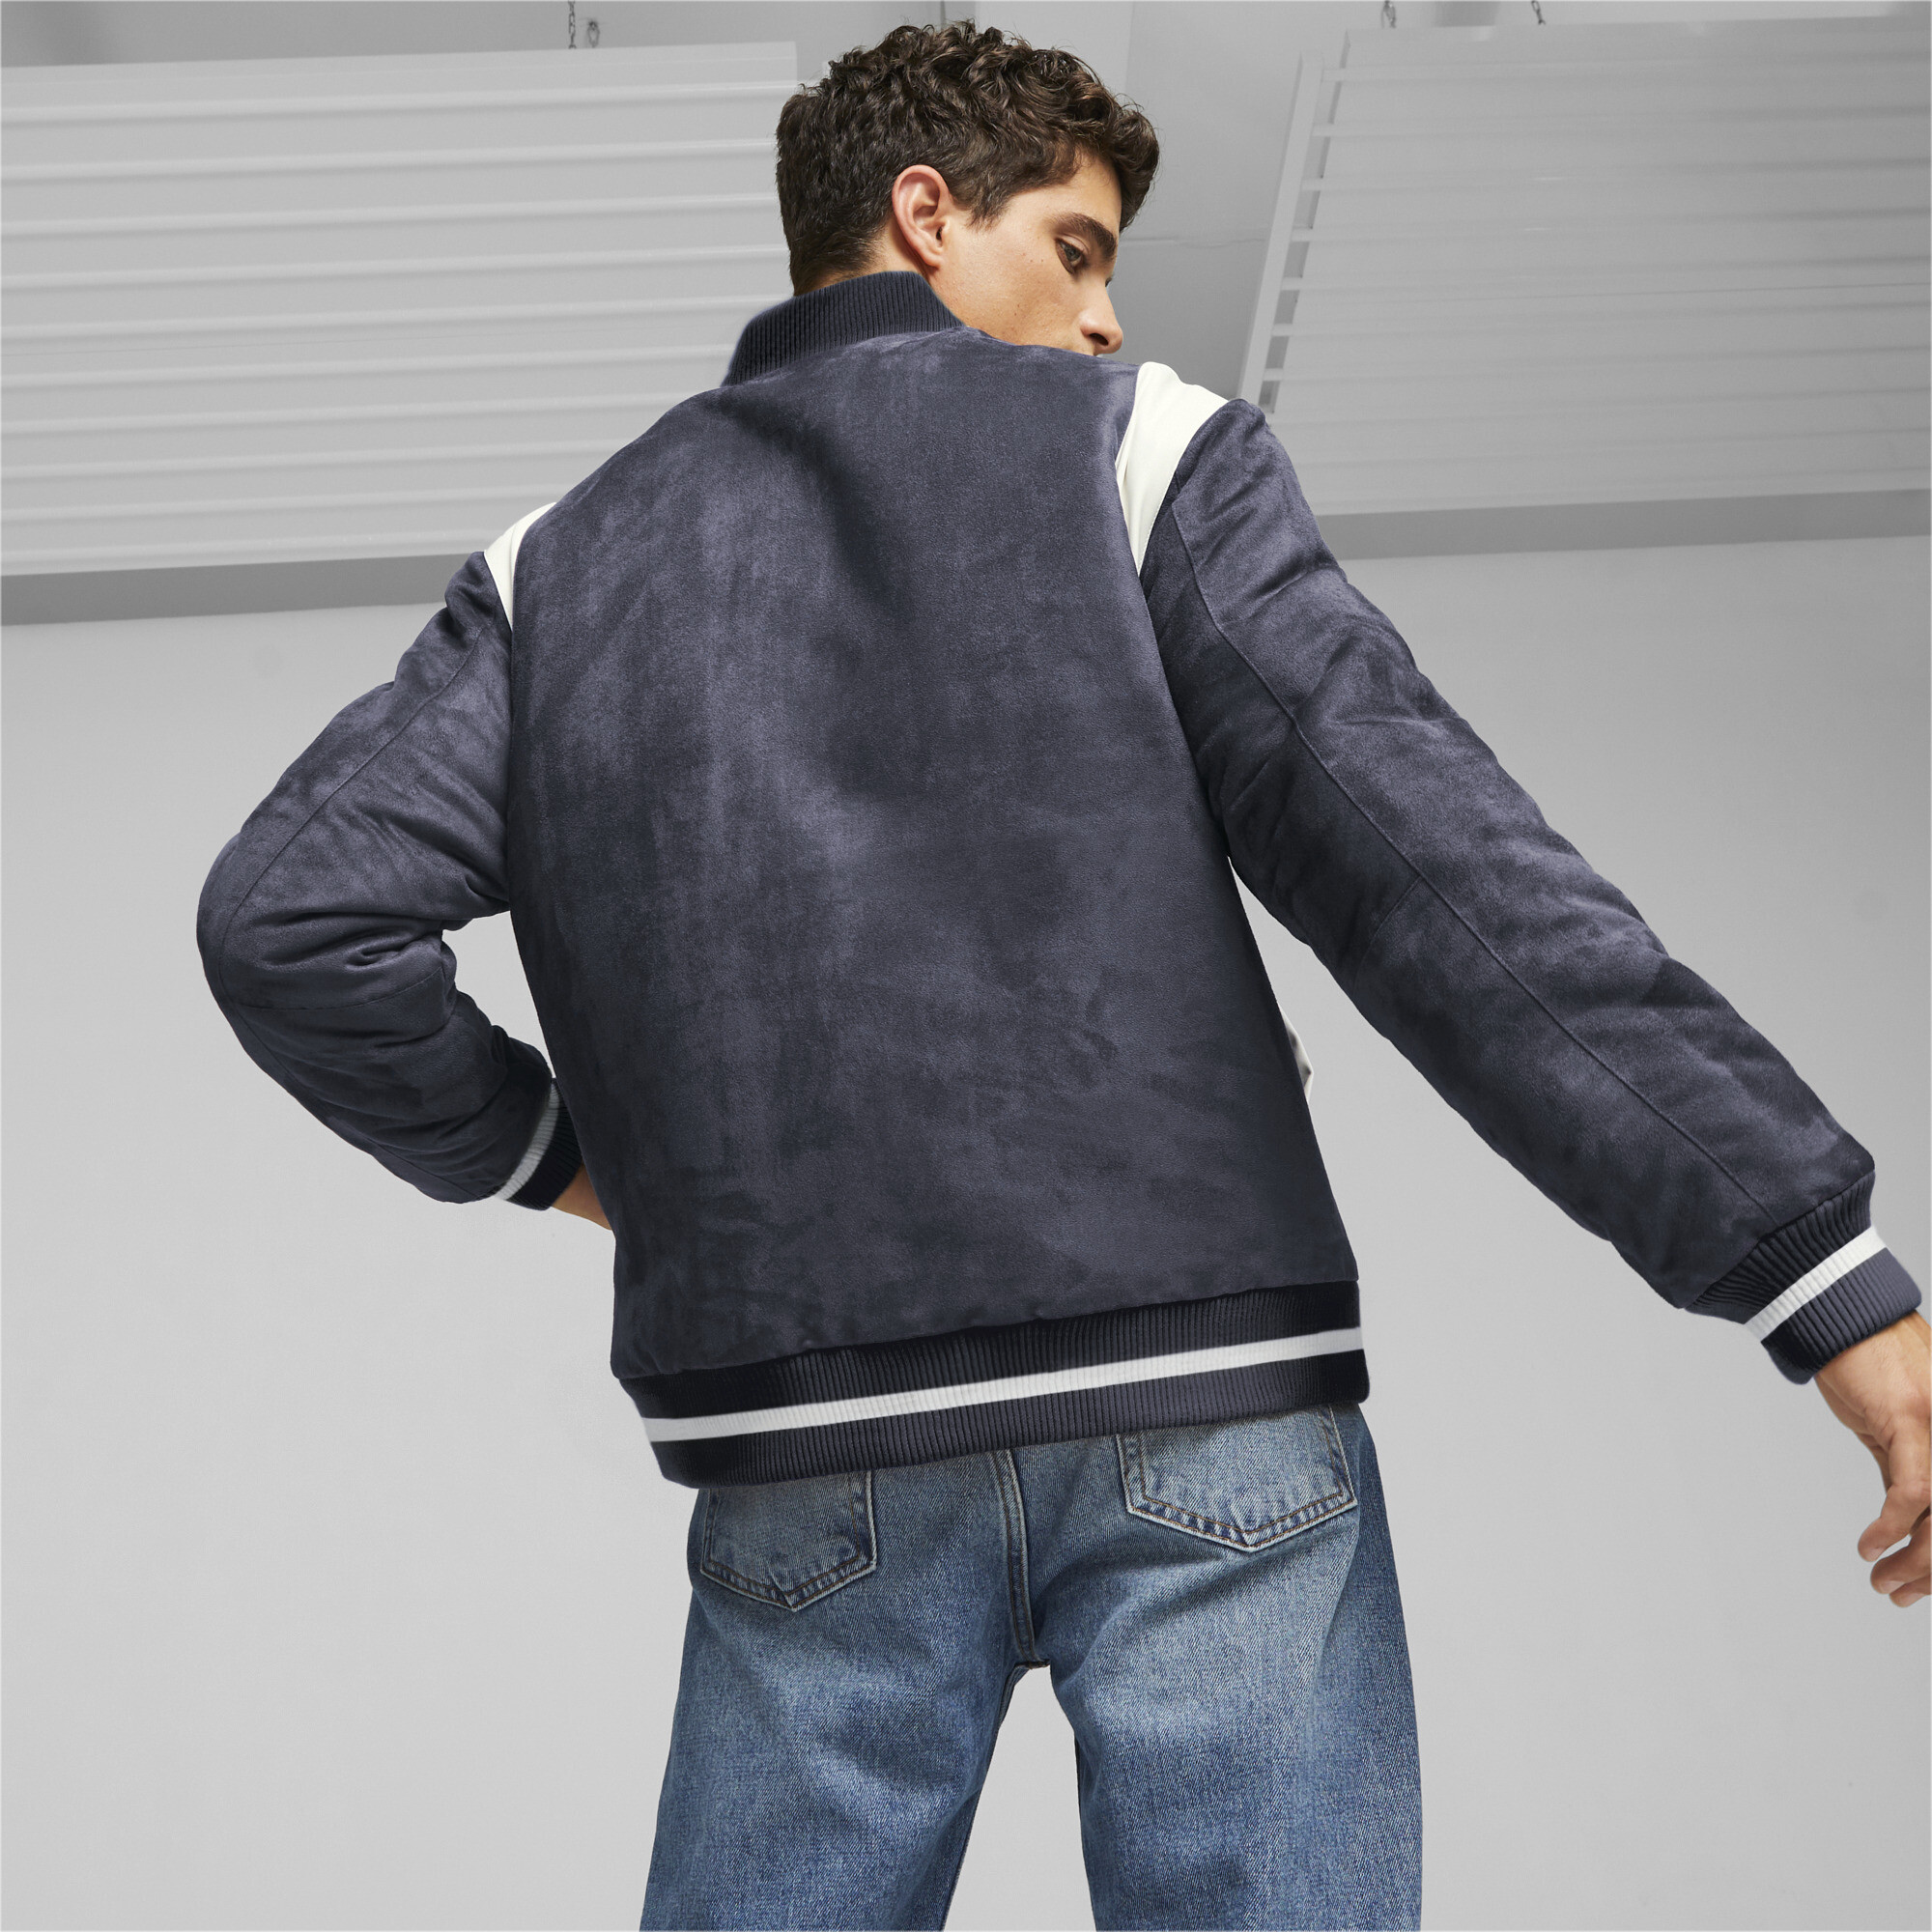 Men's PUMA X STAPLE Varisty Jacket In Blue, Size Medium